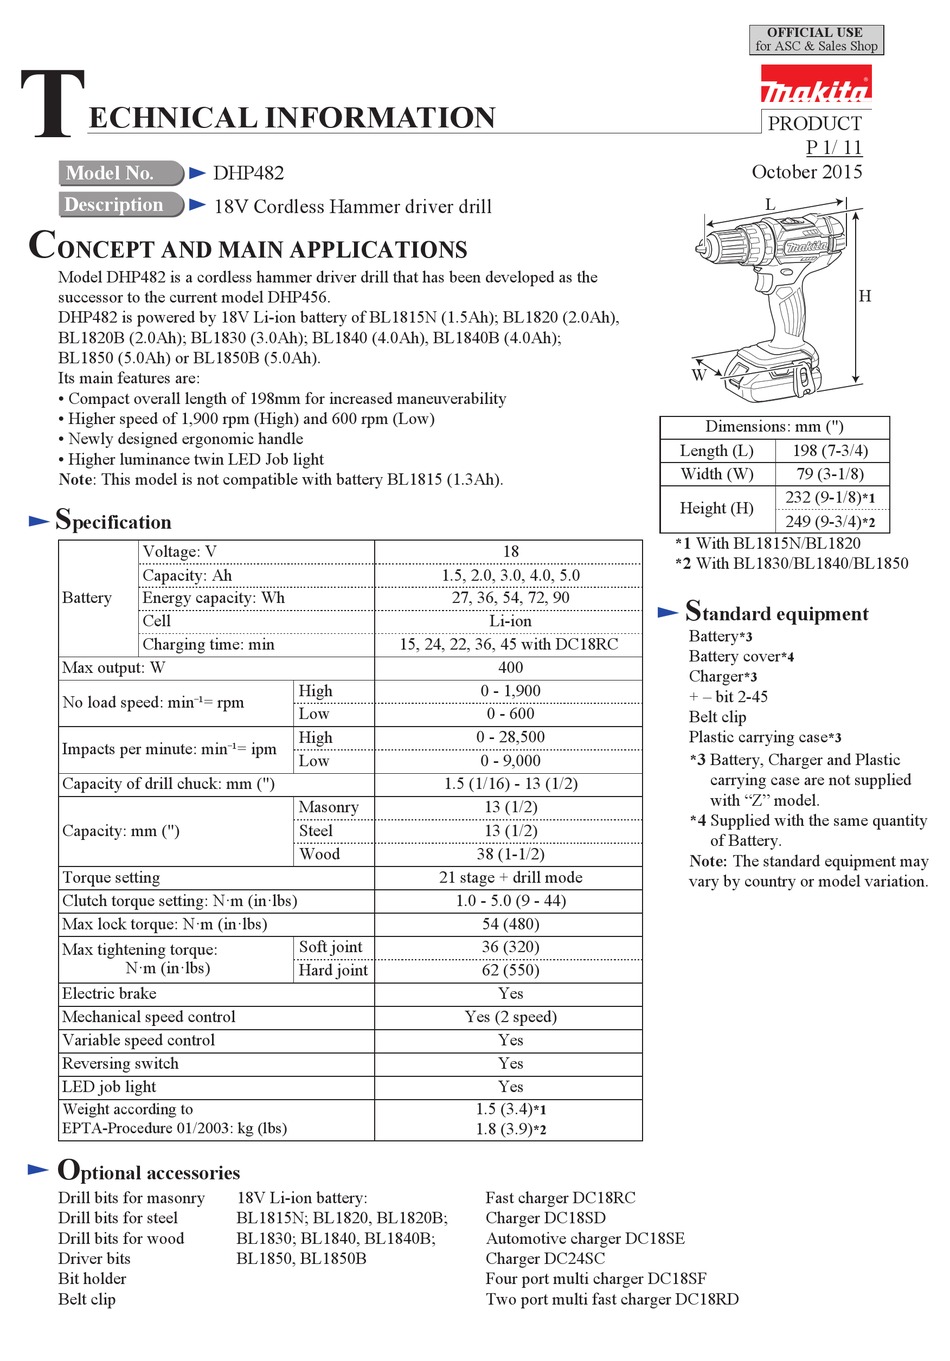 MAKITA DHP482 TECHNICAL INFORMATION Pdf Download | ManualsLib